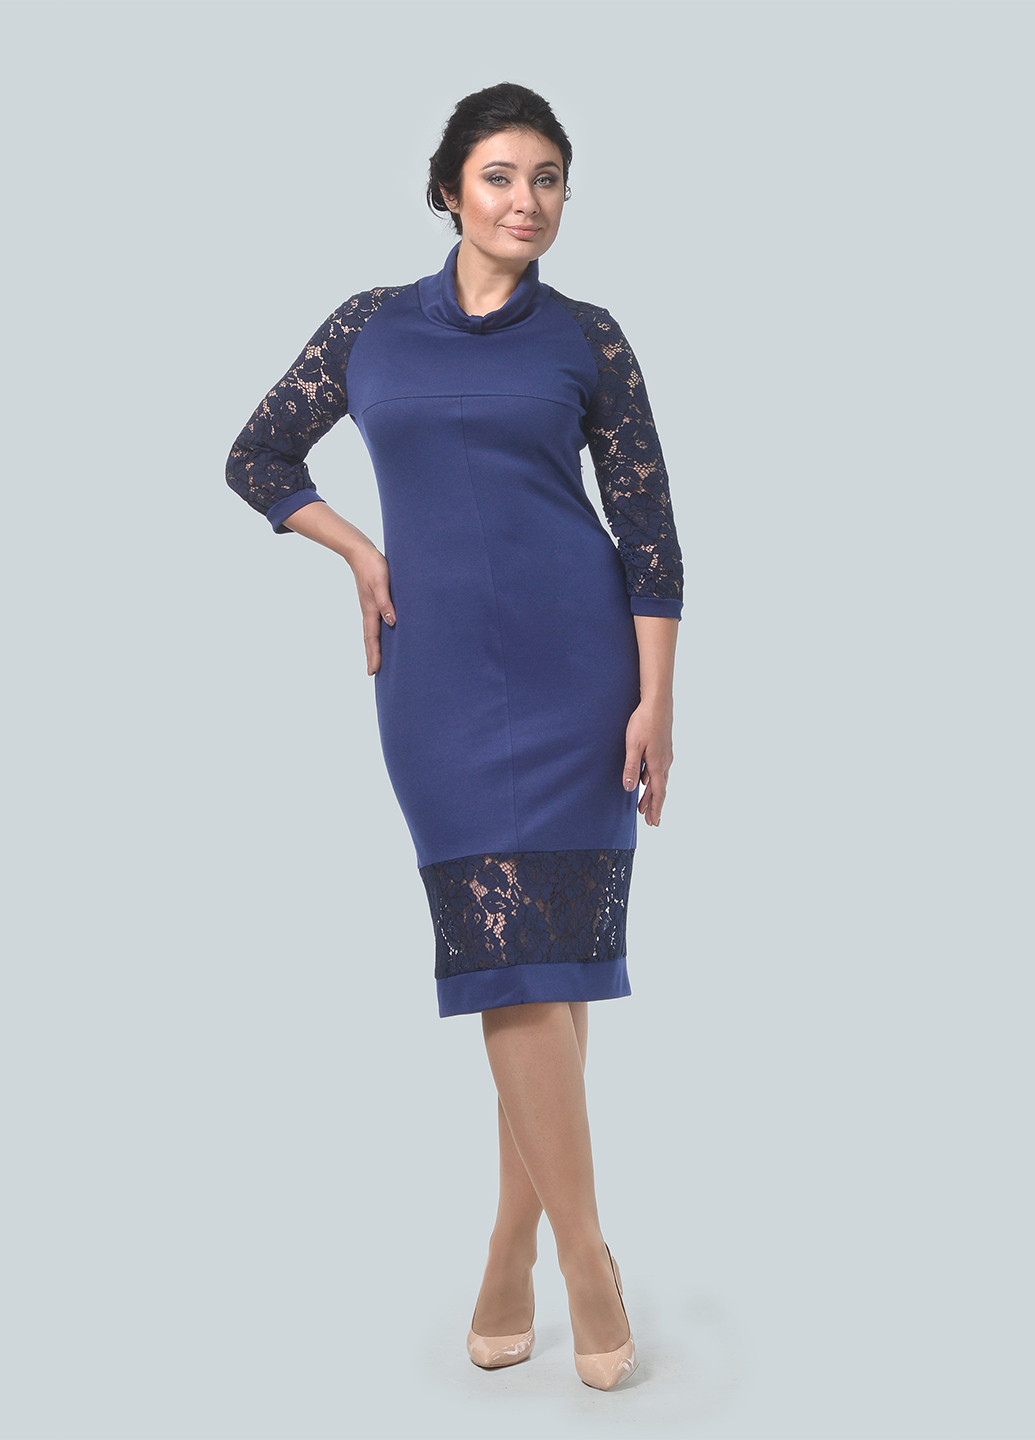 Синее кэжуал платье футляр Alika Kruss однотонное